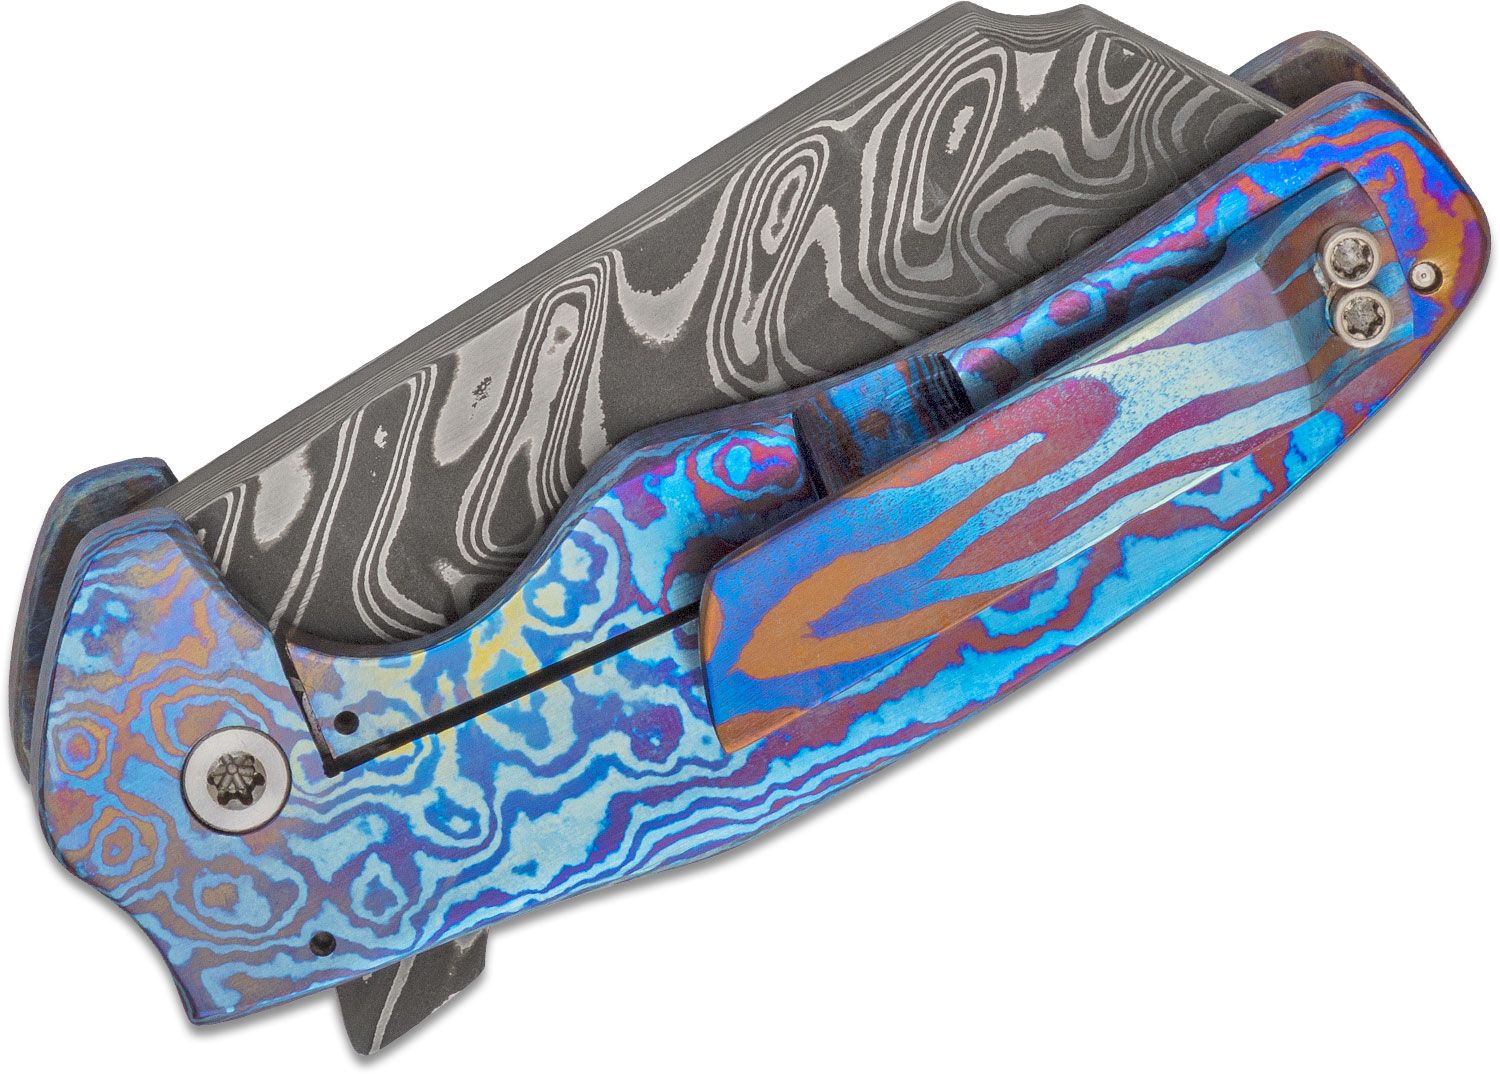 Timascus knife Shizeku B.Fancy Wild 2/2 of the Manufactory S&L